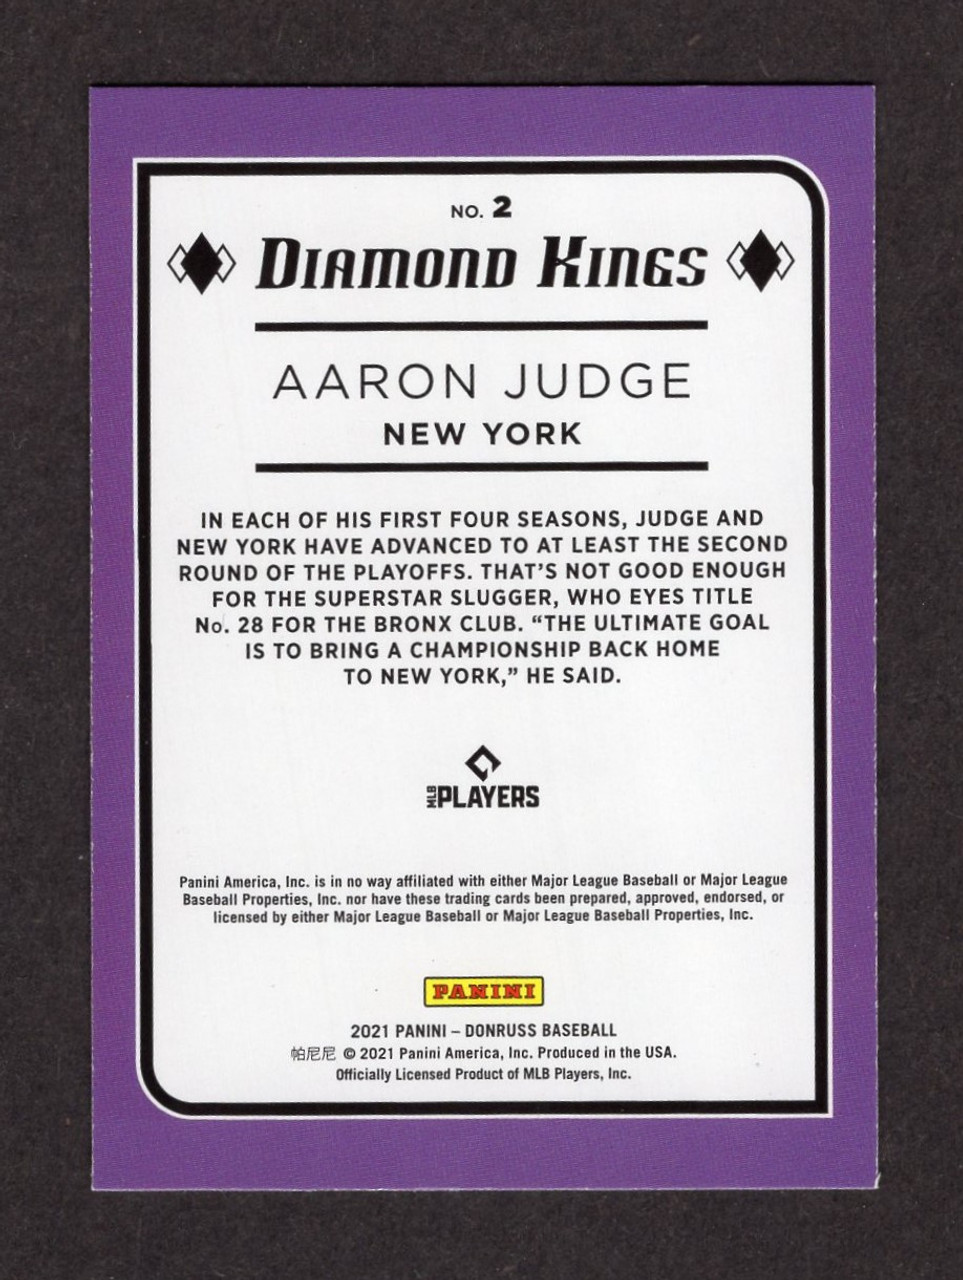 2021 Panini Donruss #2 Aaron Judge Diamond Kings Blue Holo Parallel